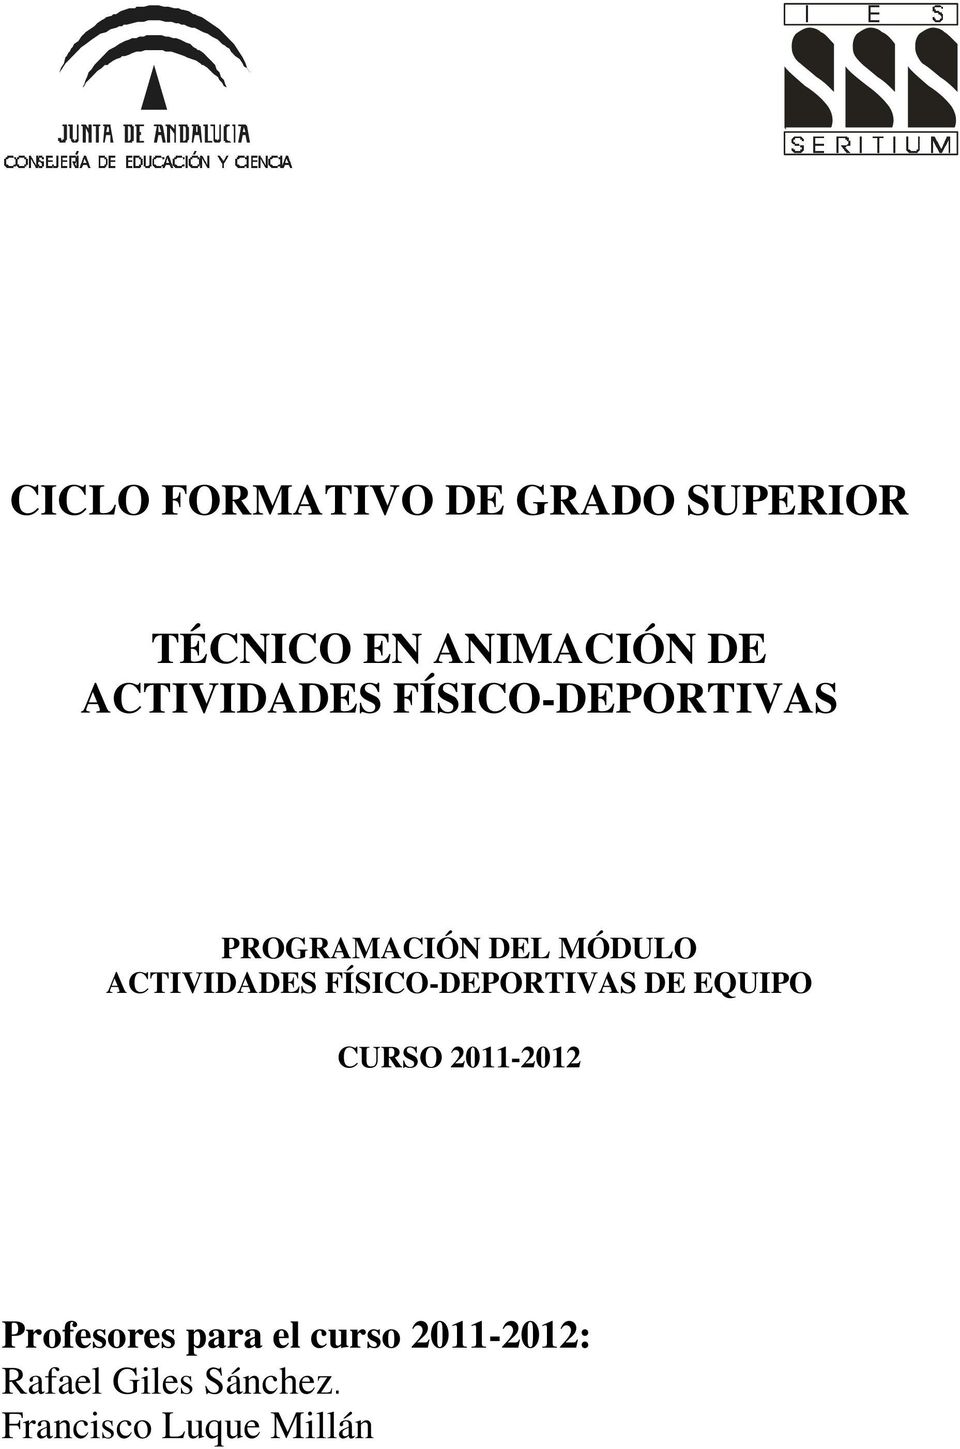 ACTIVIDADES FÍSICO-DEPORTIVAS DE EQUIPO CURSO 2011-2012